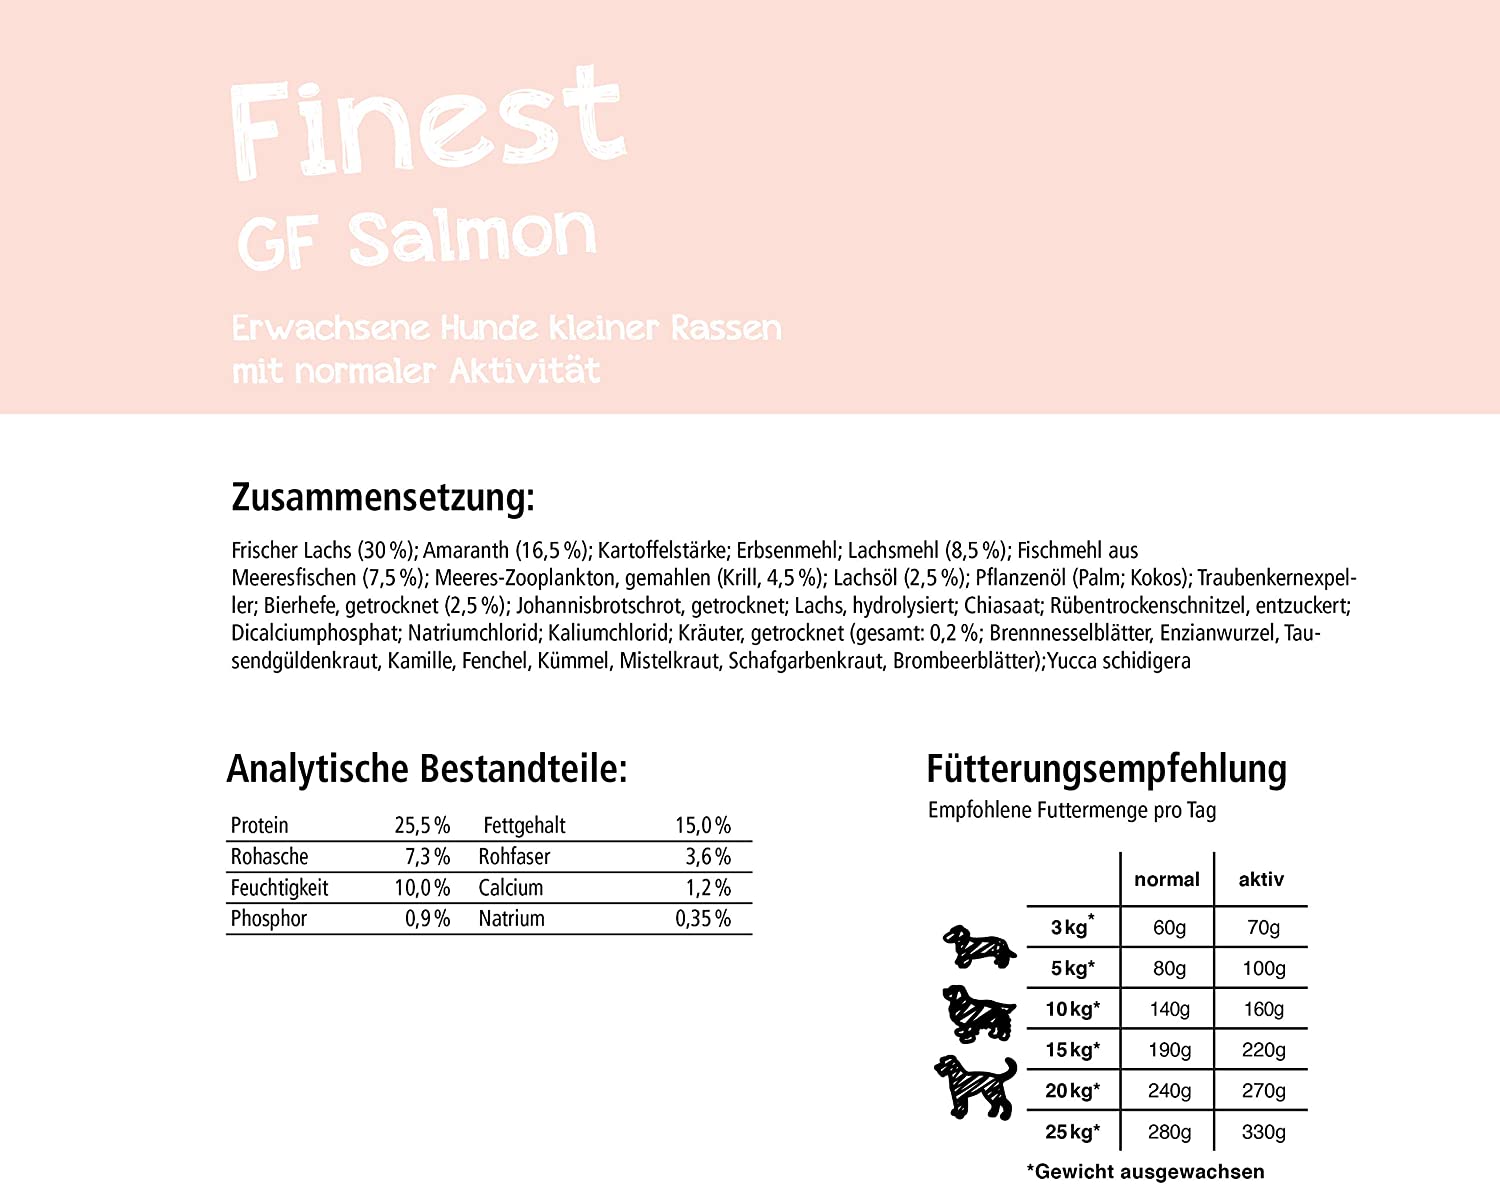  Belcando Canine Adult Grain Free Salmon 4Kg 4000 g 